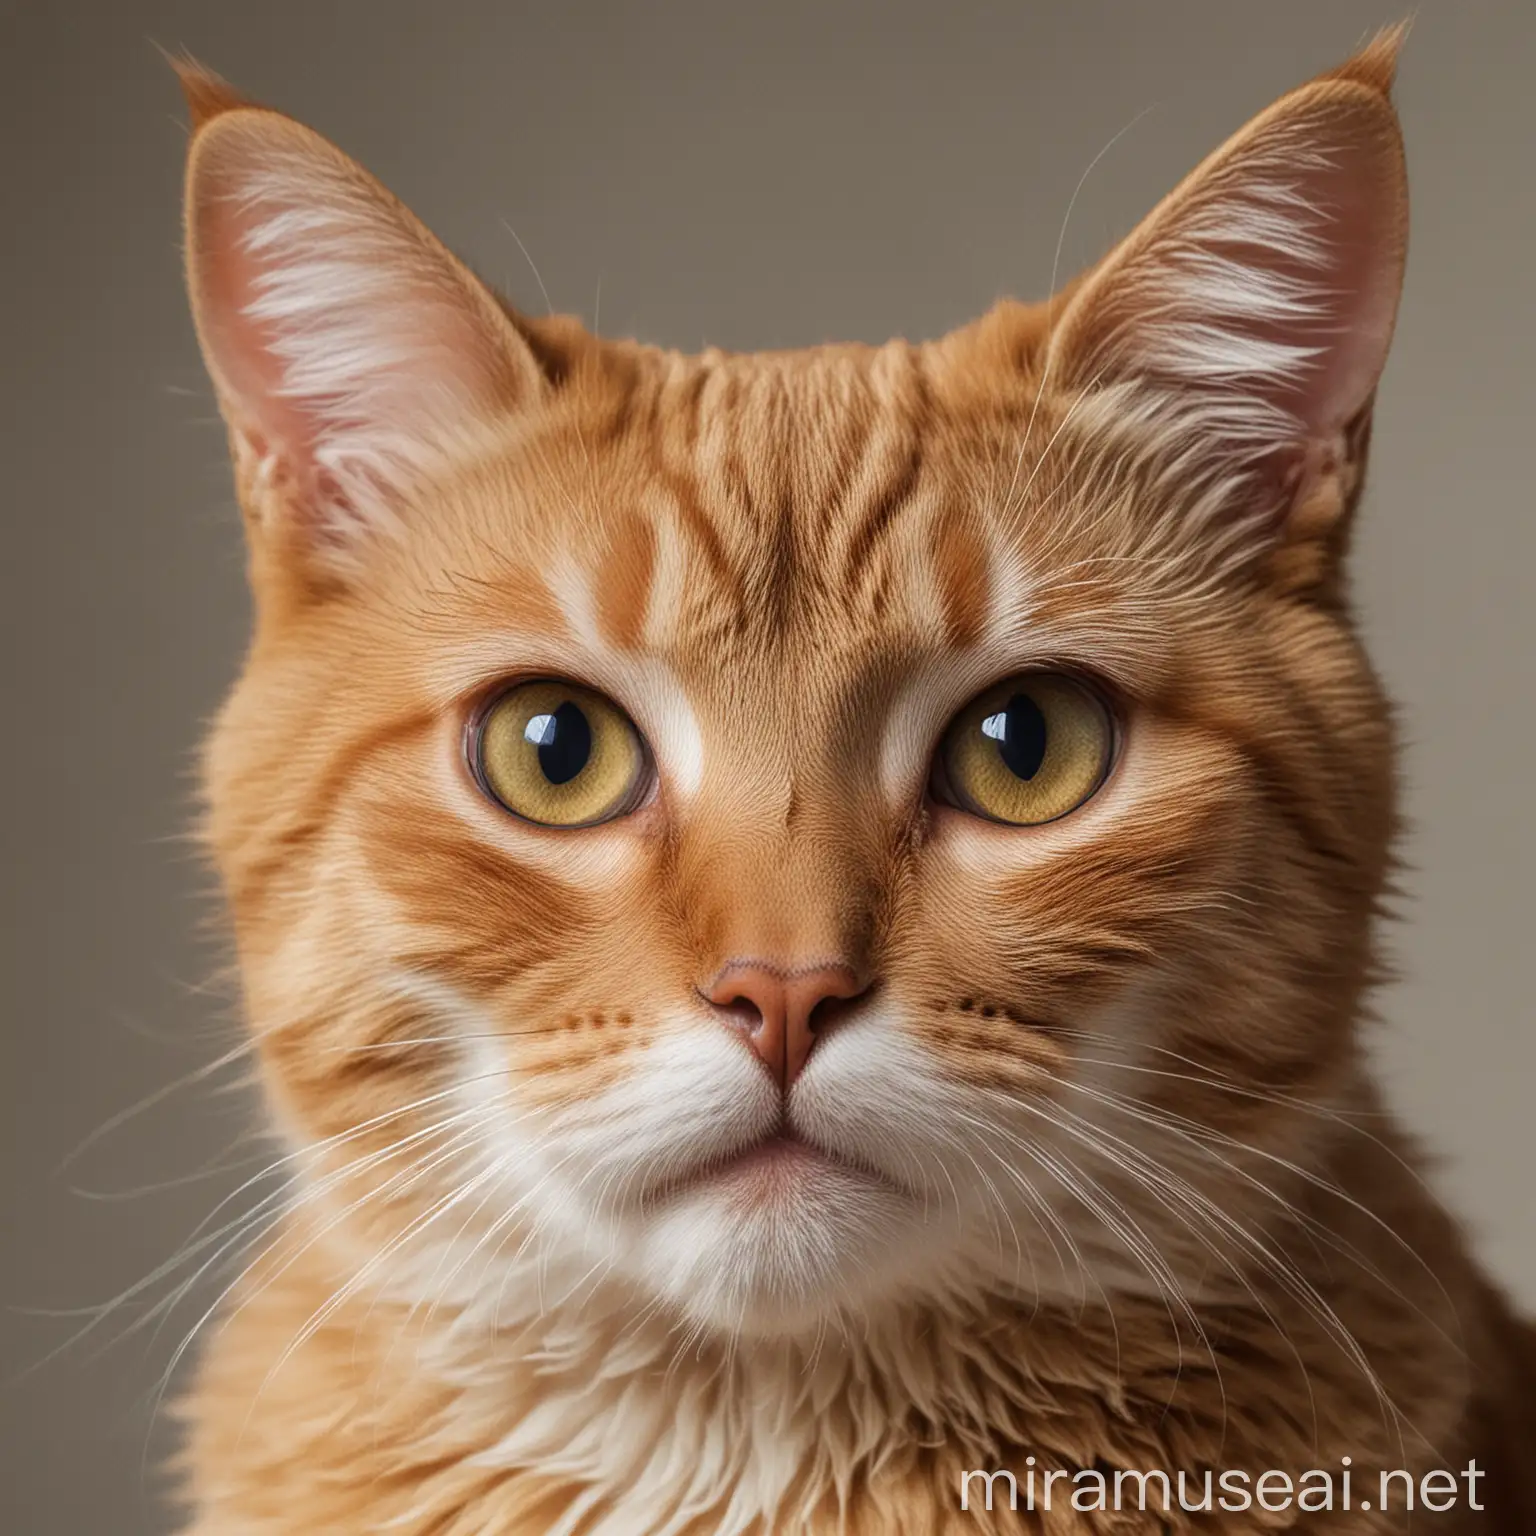 Captivating Solo Cat Portraits Expressive Faces and Unique Personalities